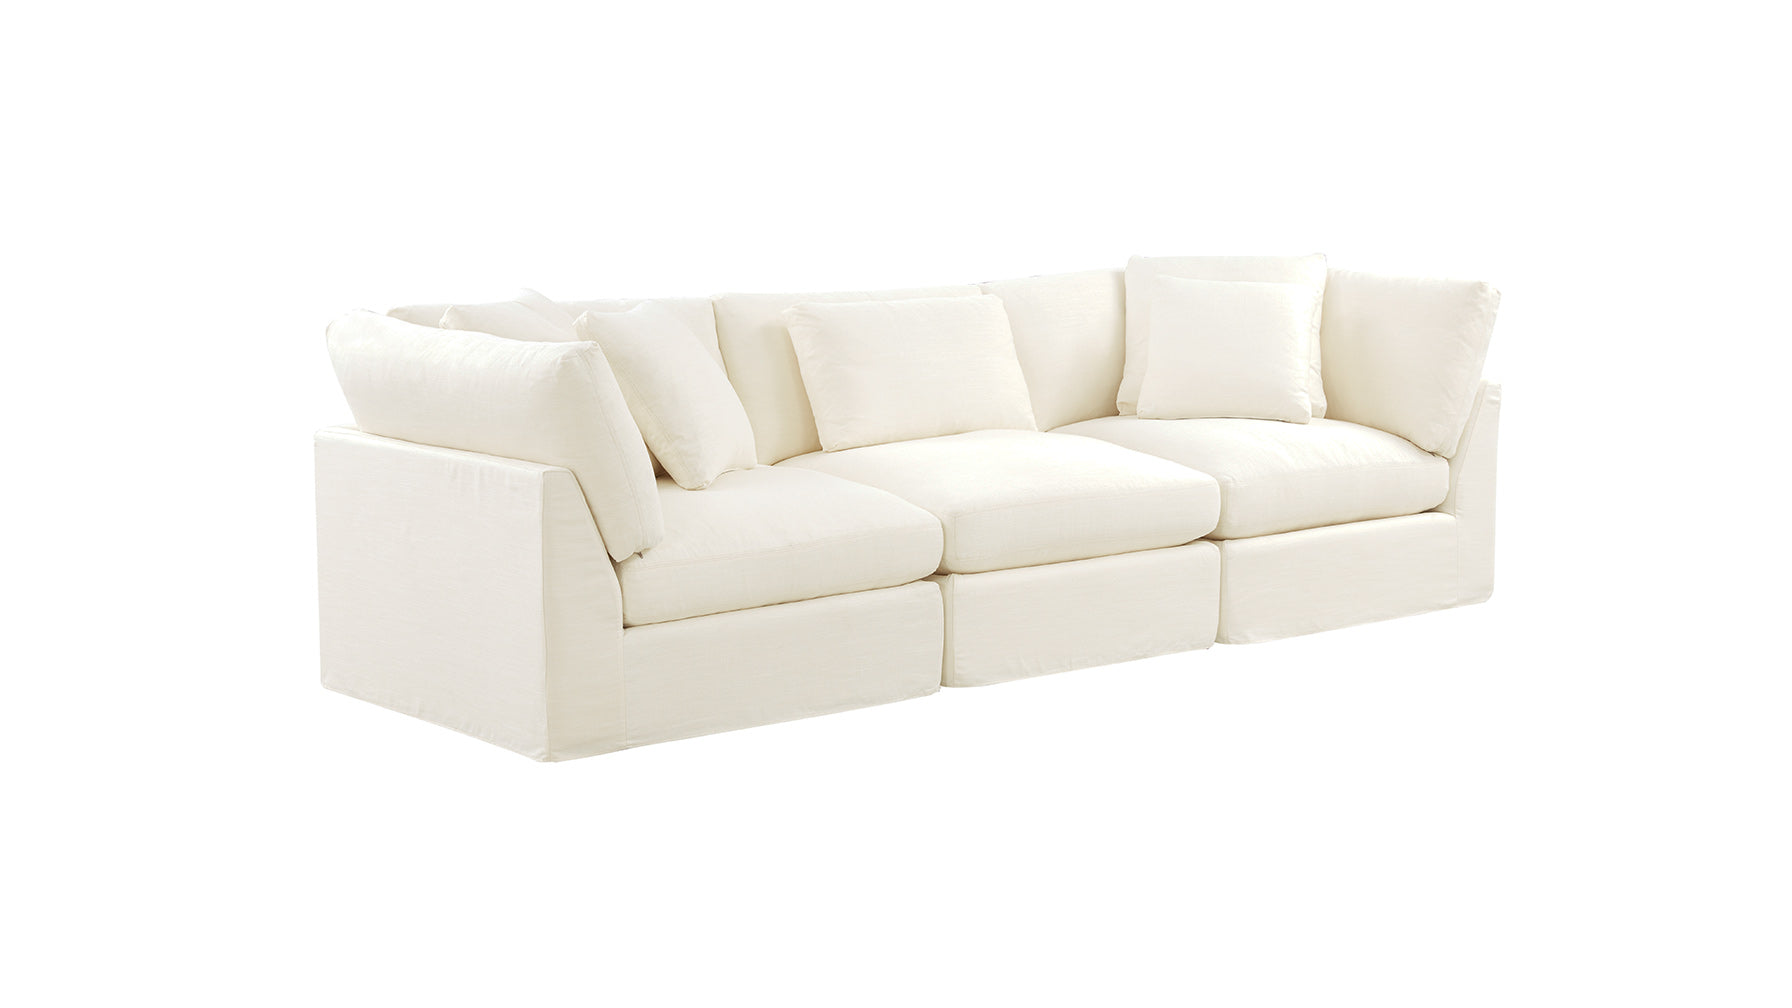 Get Together™ 3-Piece Modular Sofa, Large, Cream Linen - Image 2